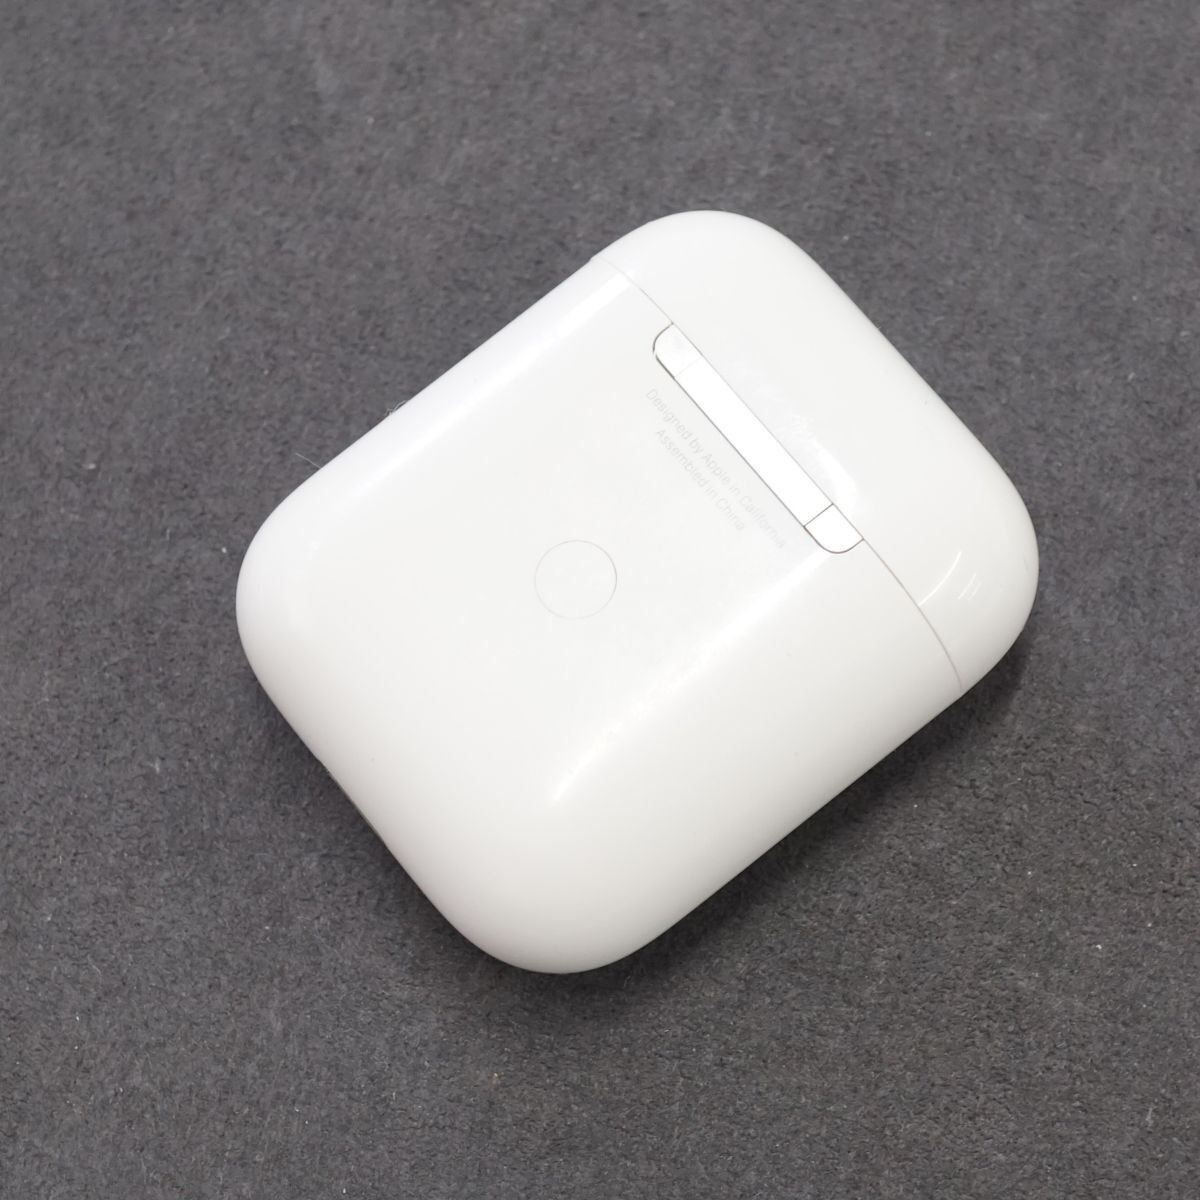 Apple AirPods with Wireless Charging Case エアーポッズ 充電ケースのみ USED品 第二世代 Qi対応 MRXJ2J/A 完動品 V9911